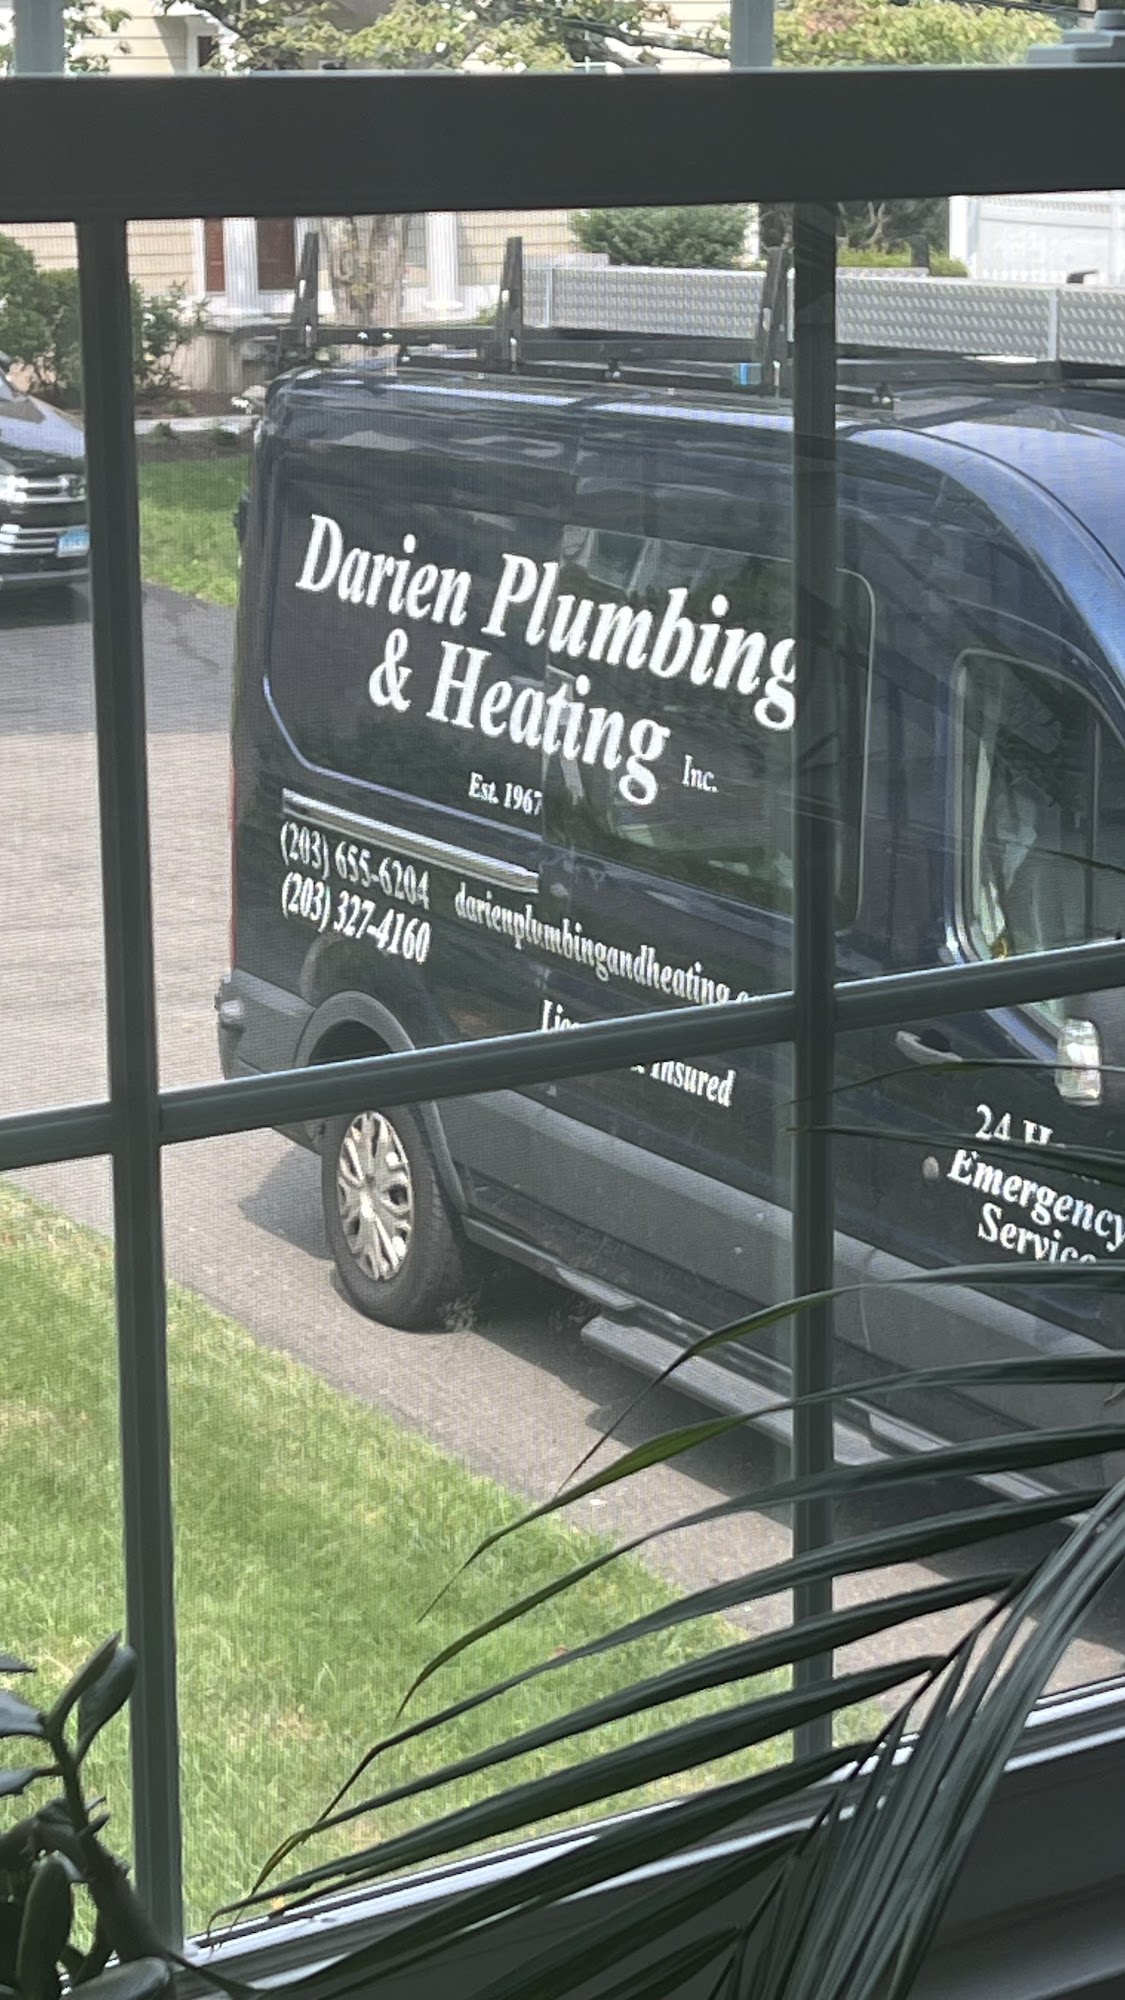 Darien Plumbing & Heating Inc.